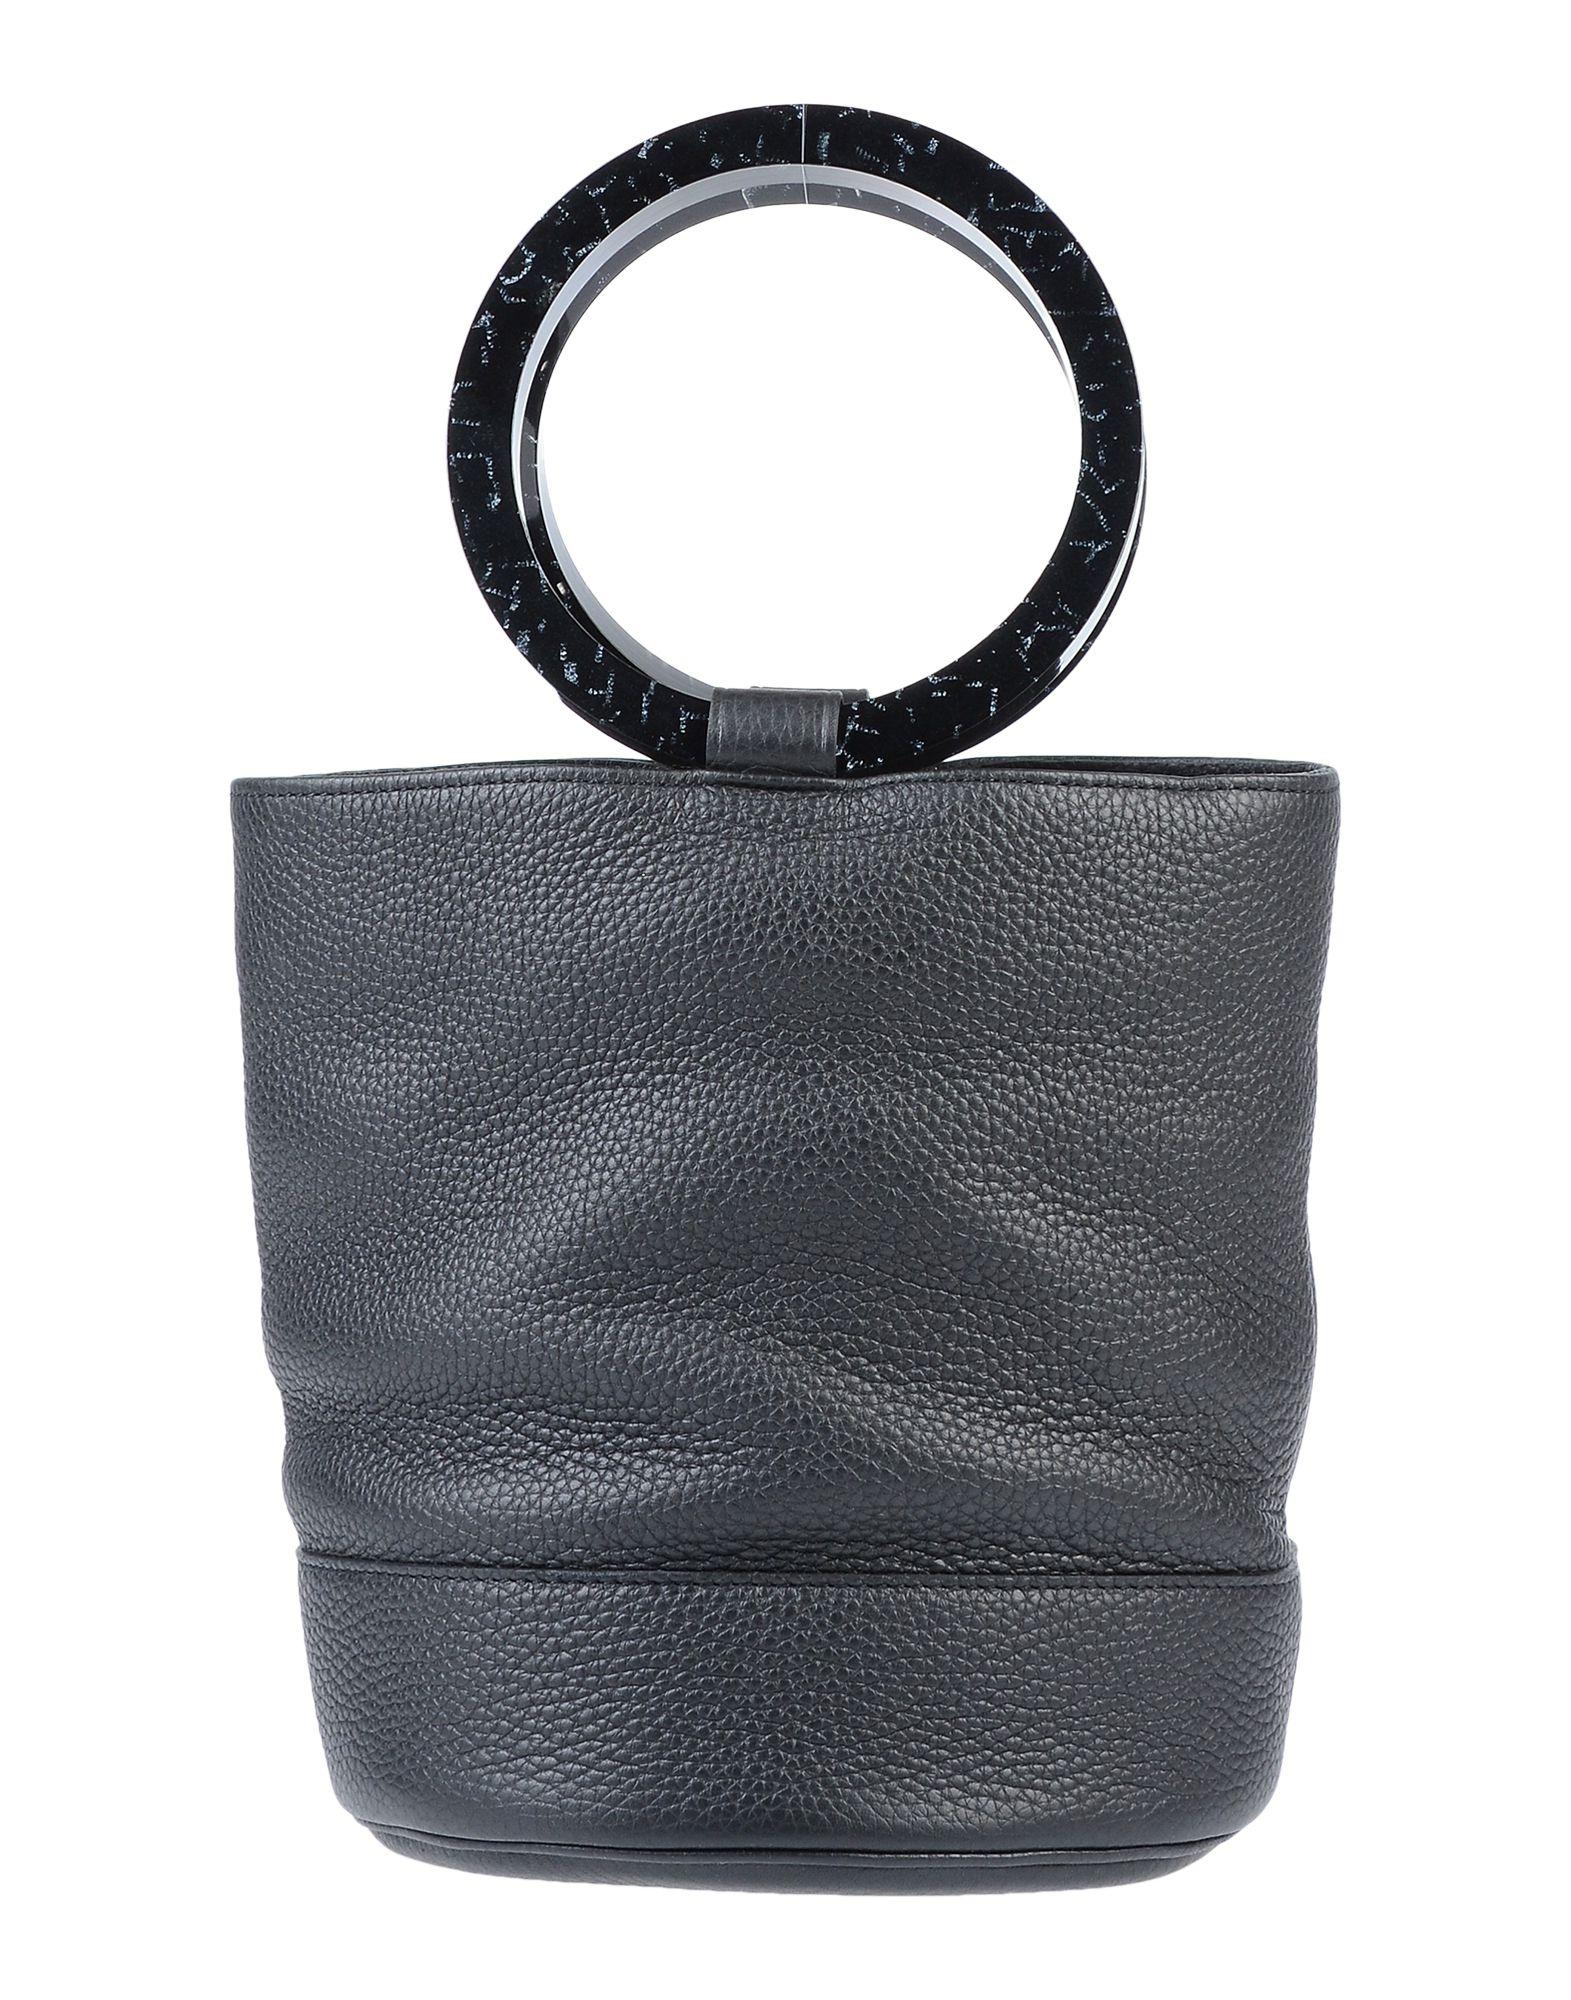 Simon Miller Leather Handbag in Black - Save 48% - Lyst